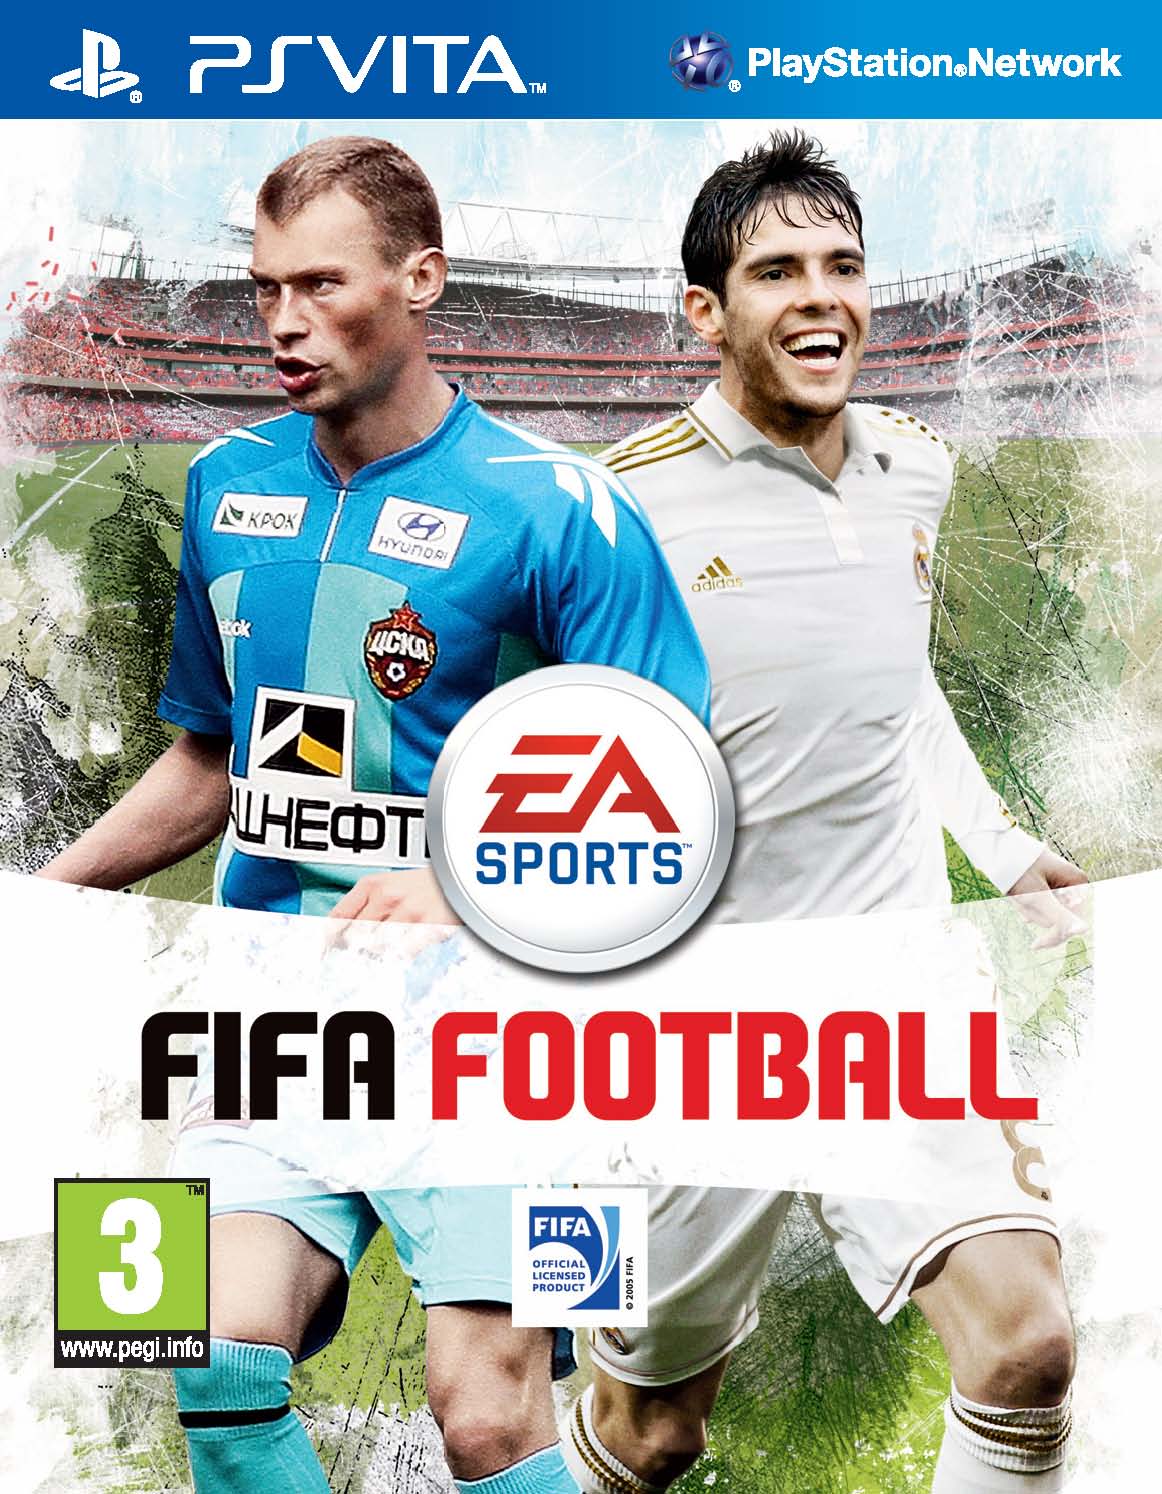 Fifa vita. FIFA PS Vita. Плейстейшен футбол. FIFA 12 PS Vita. Football PLAYSTATION FIFA.